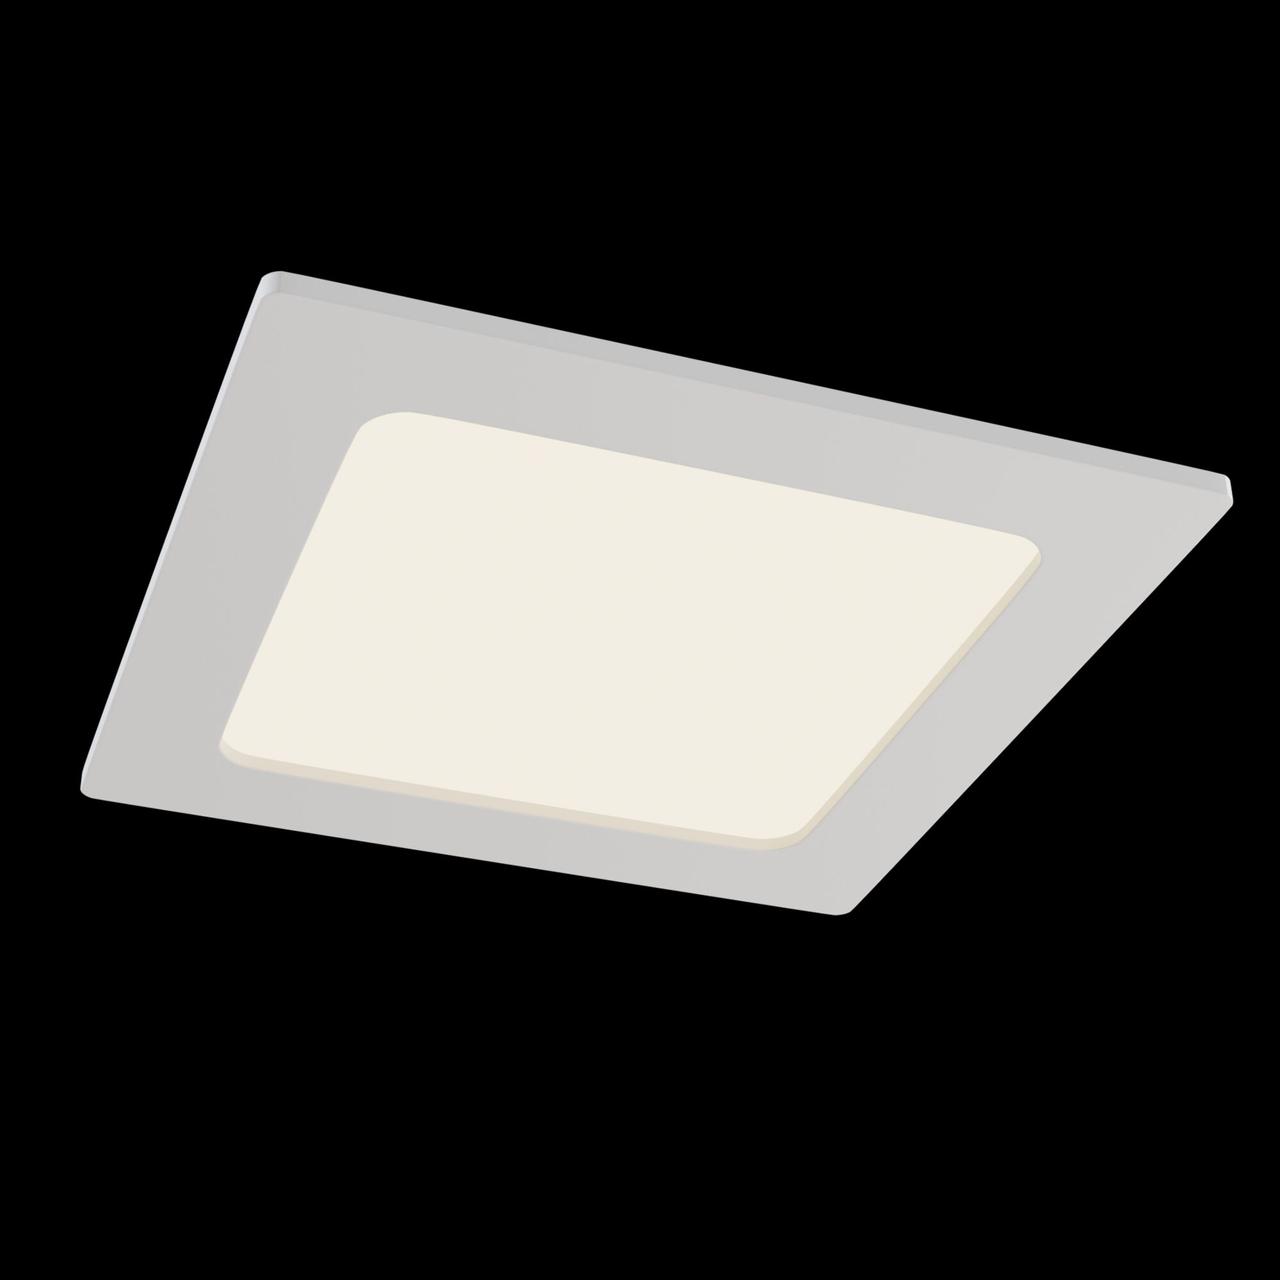 DL020-6-L12W Встраиваемый светильник Stockton Downlight Maytoni